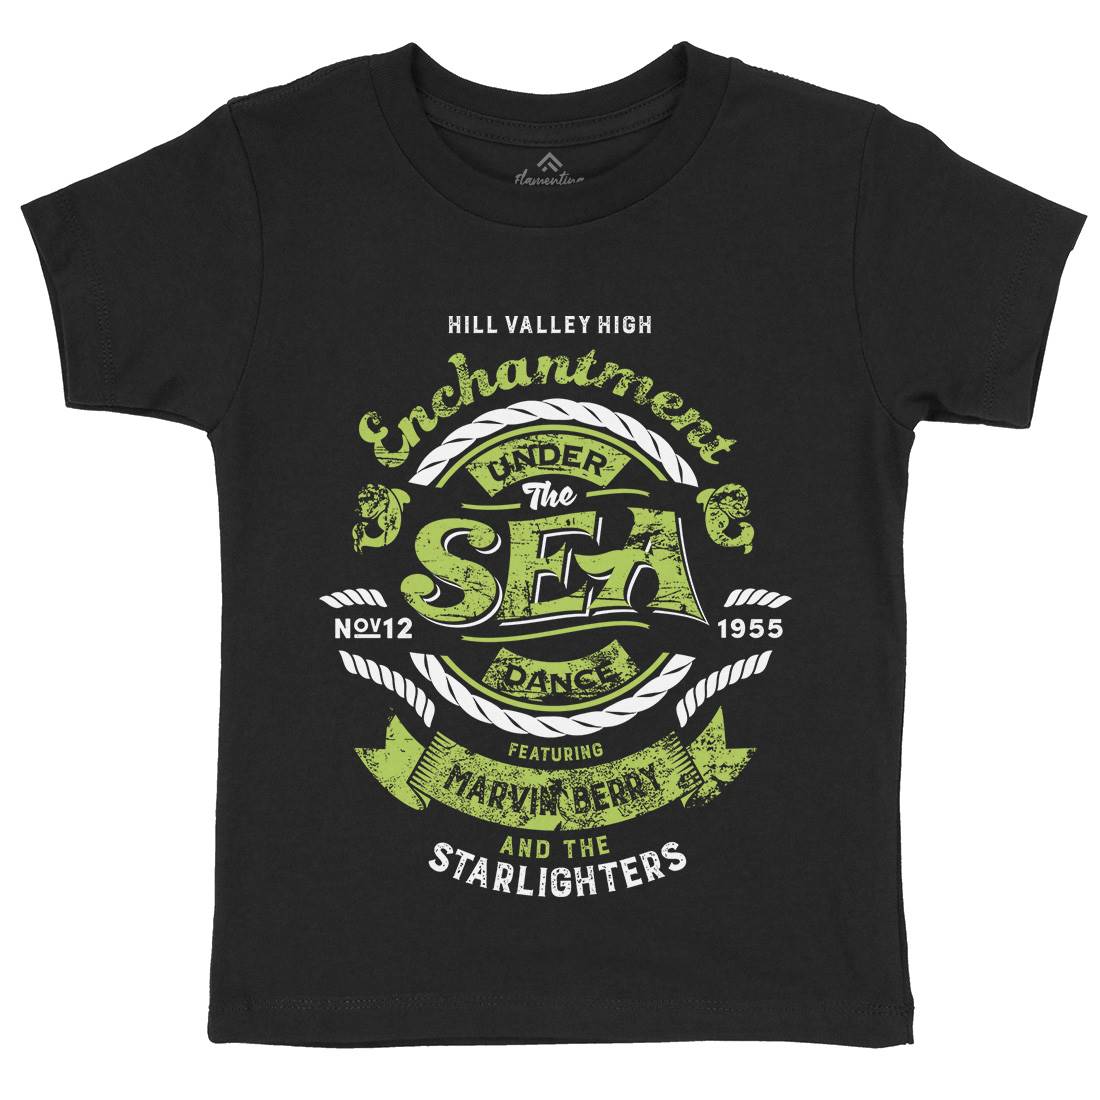 Enchantment Under The Sea Kids Organic Crew Neck T-Shirt Space D329